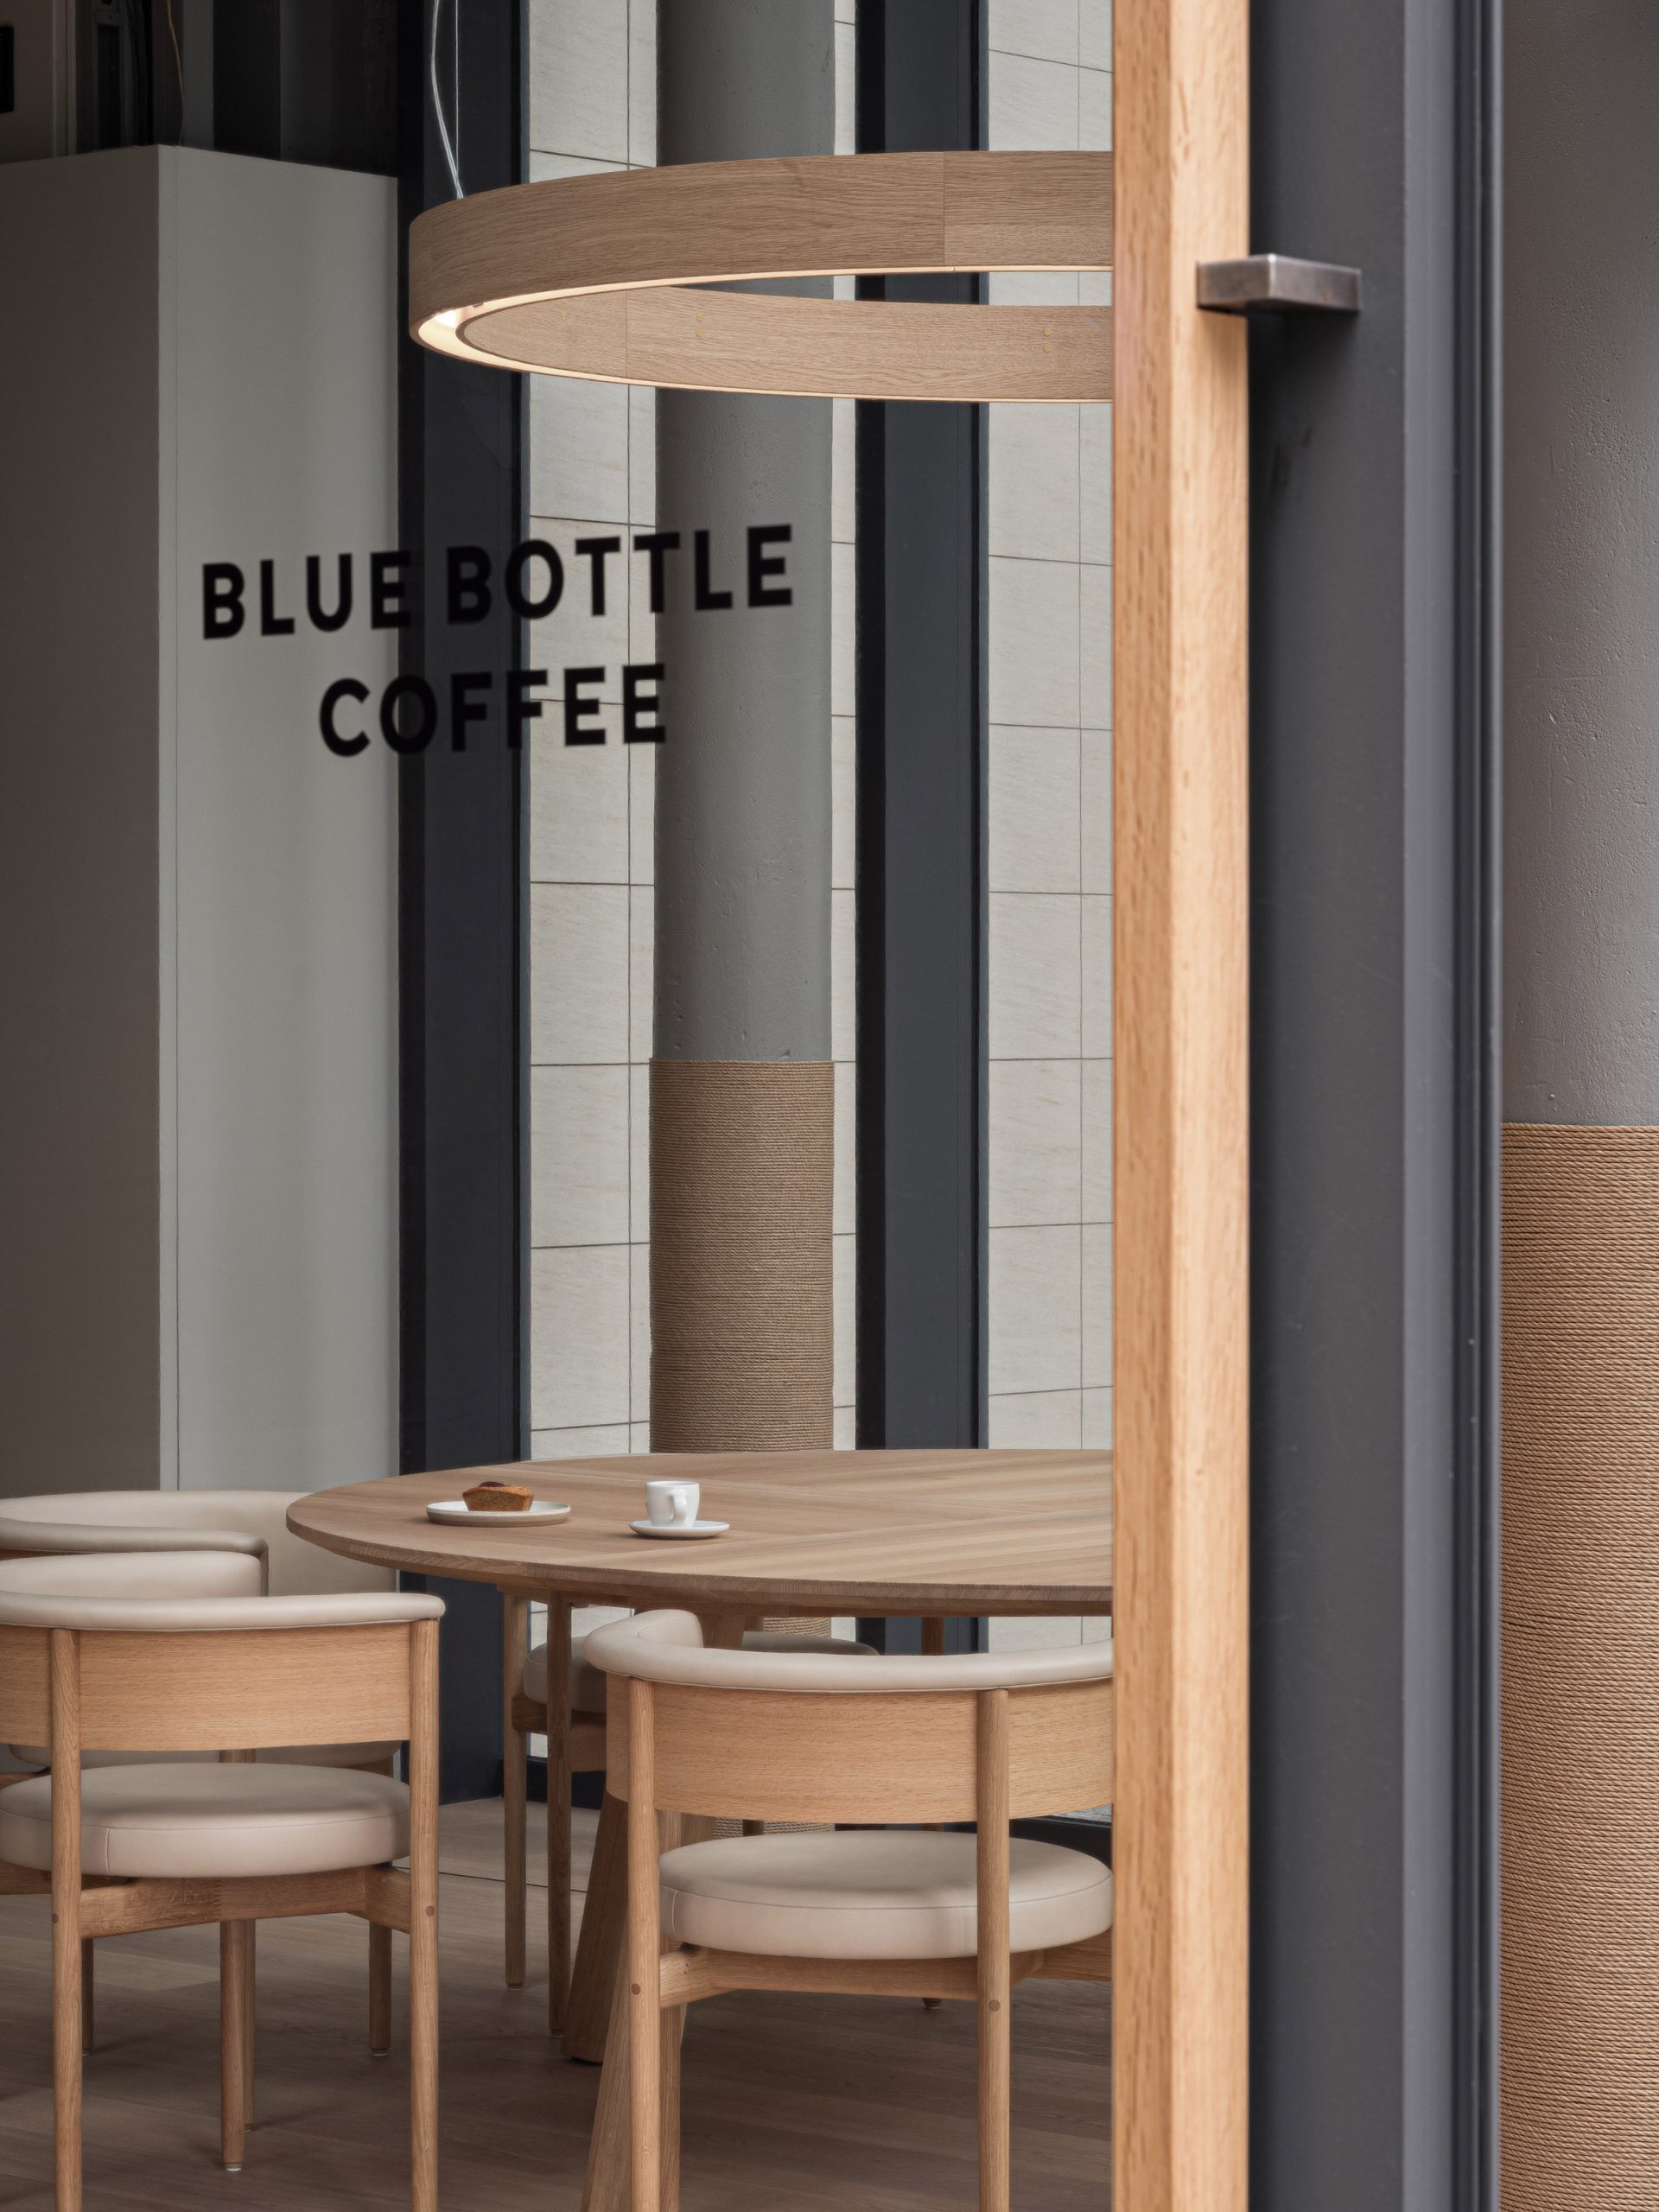 Interior of Blue Bottle Coffee cafe in Minatomirai